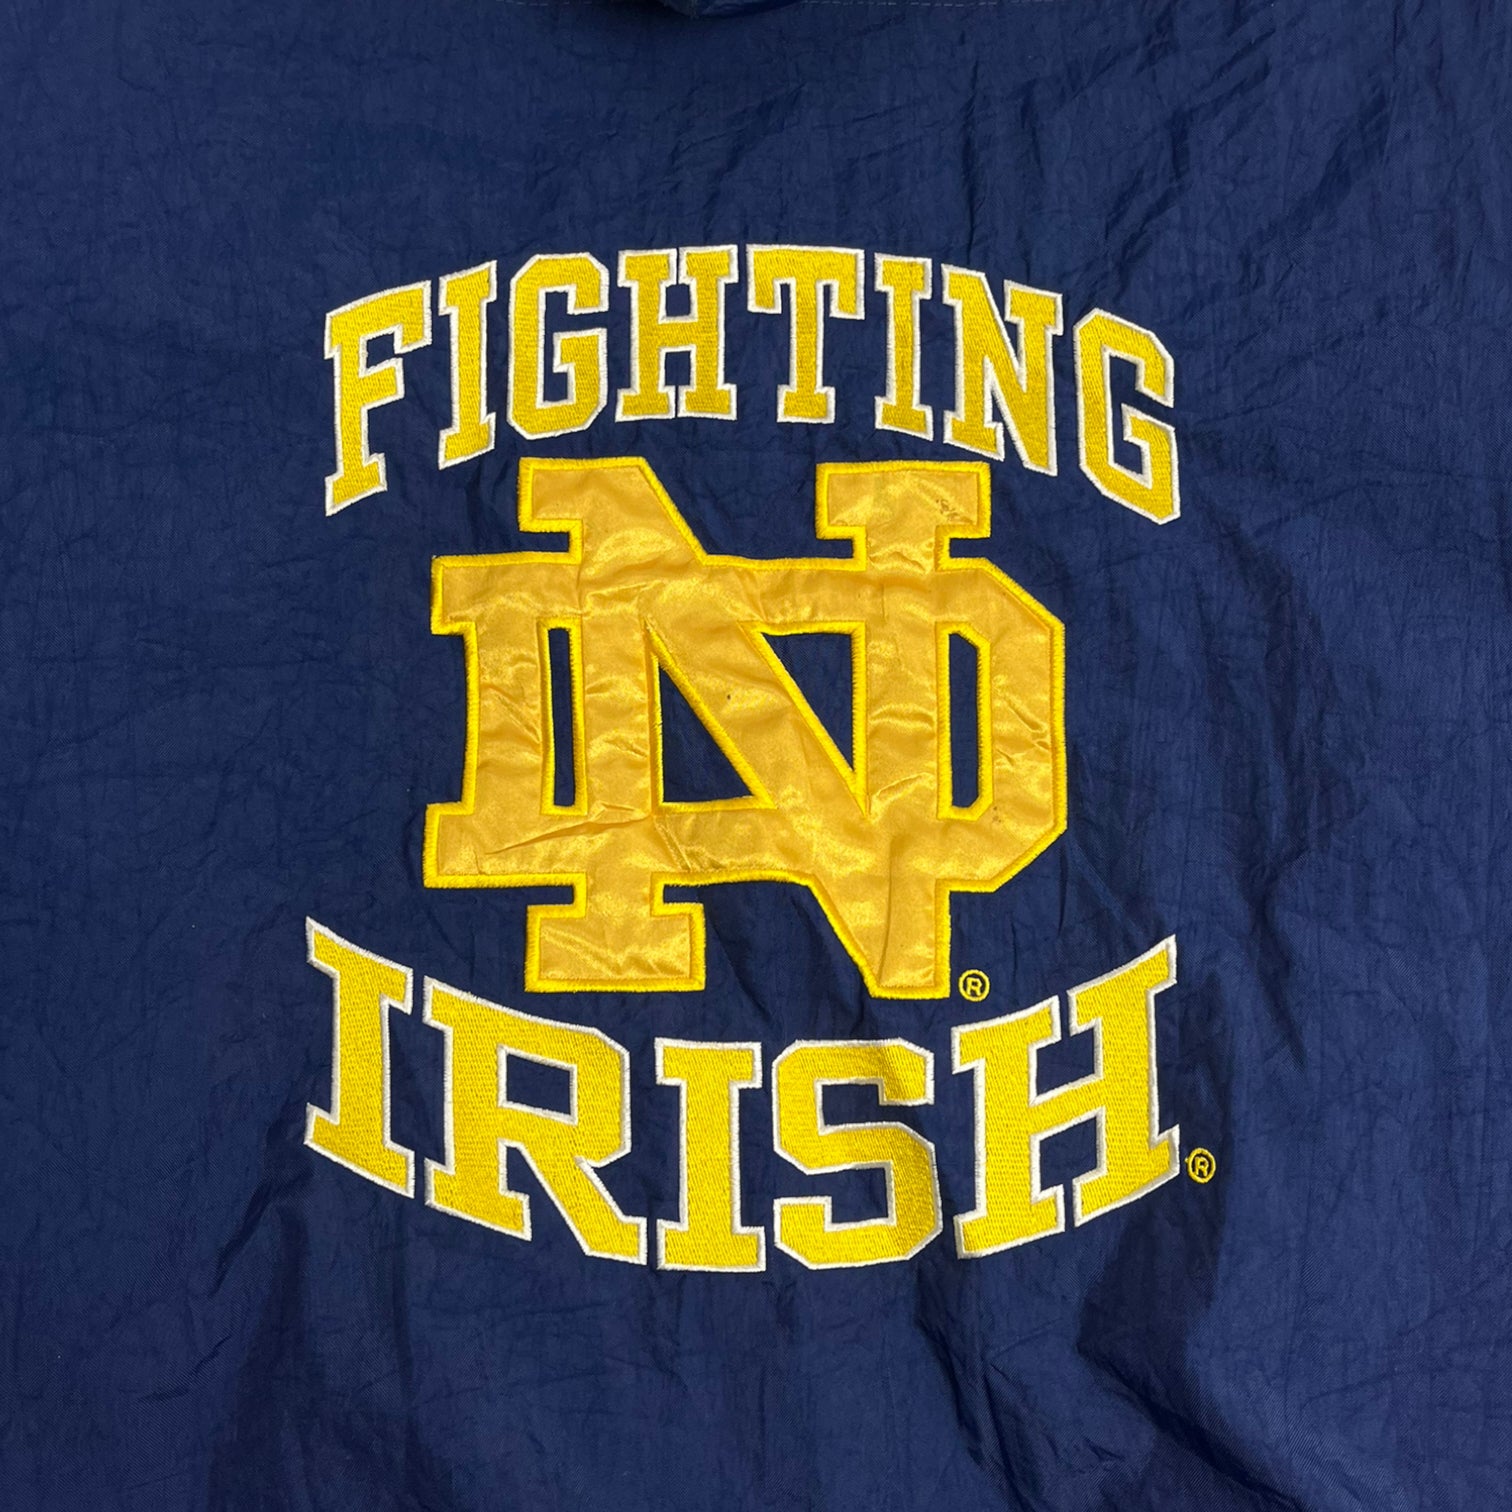 Vintage Notre Dame Fighting Irish Starter Jacket